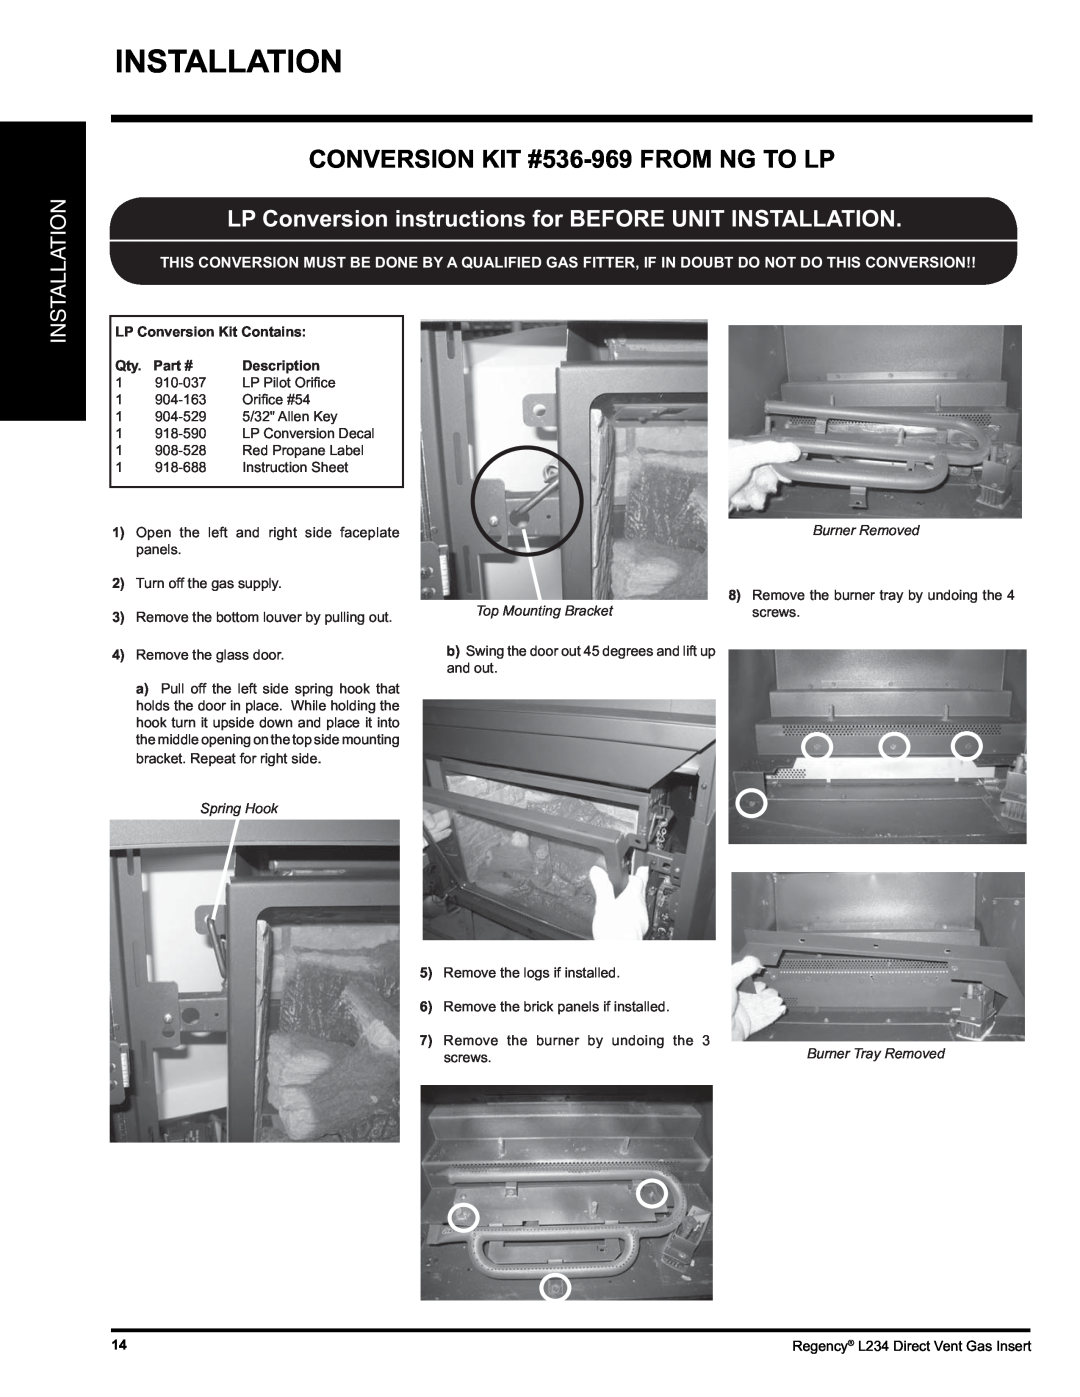 Regency L234-LP Installation, CONVERSION KIT #536-969FROM NG TO LP, LP Conversion Kit Contains, Description, Spring Hook 